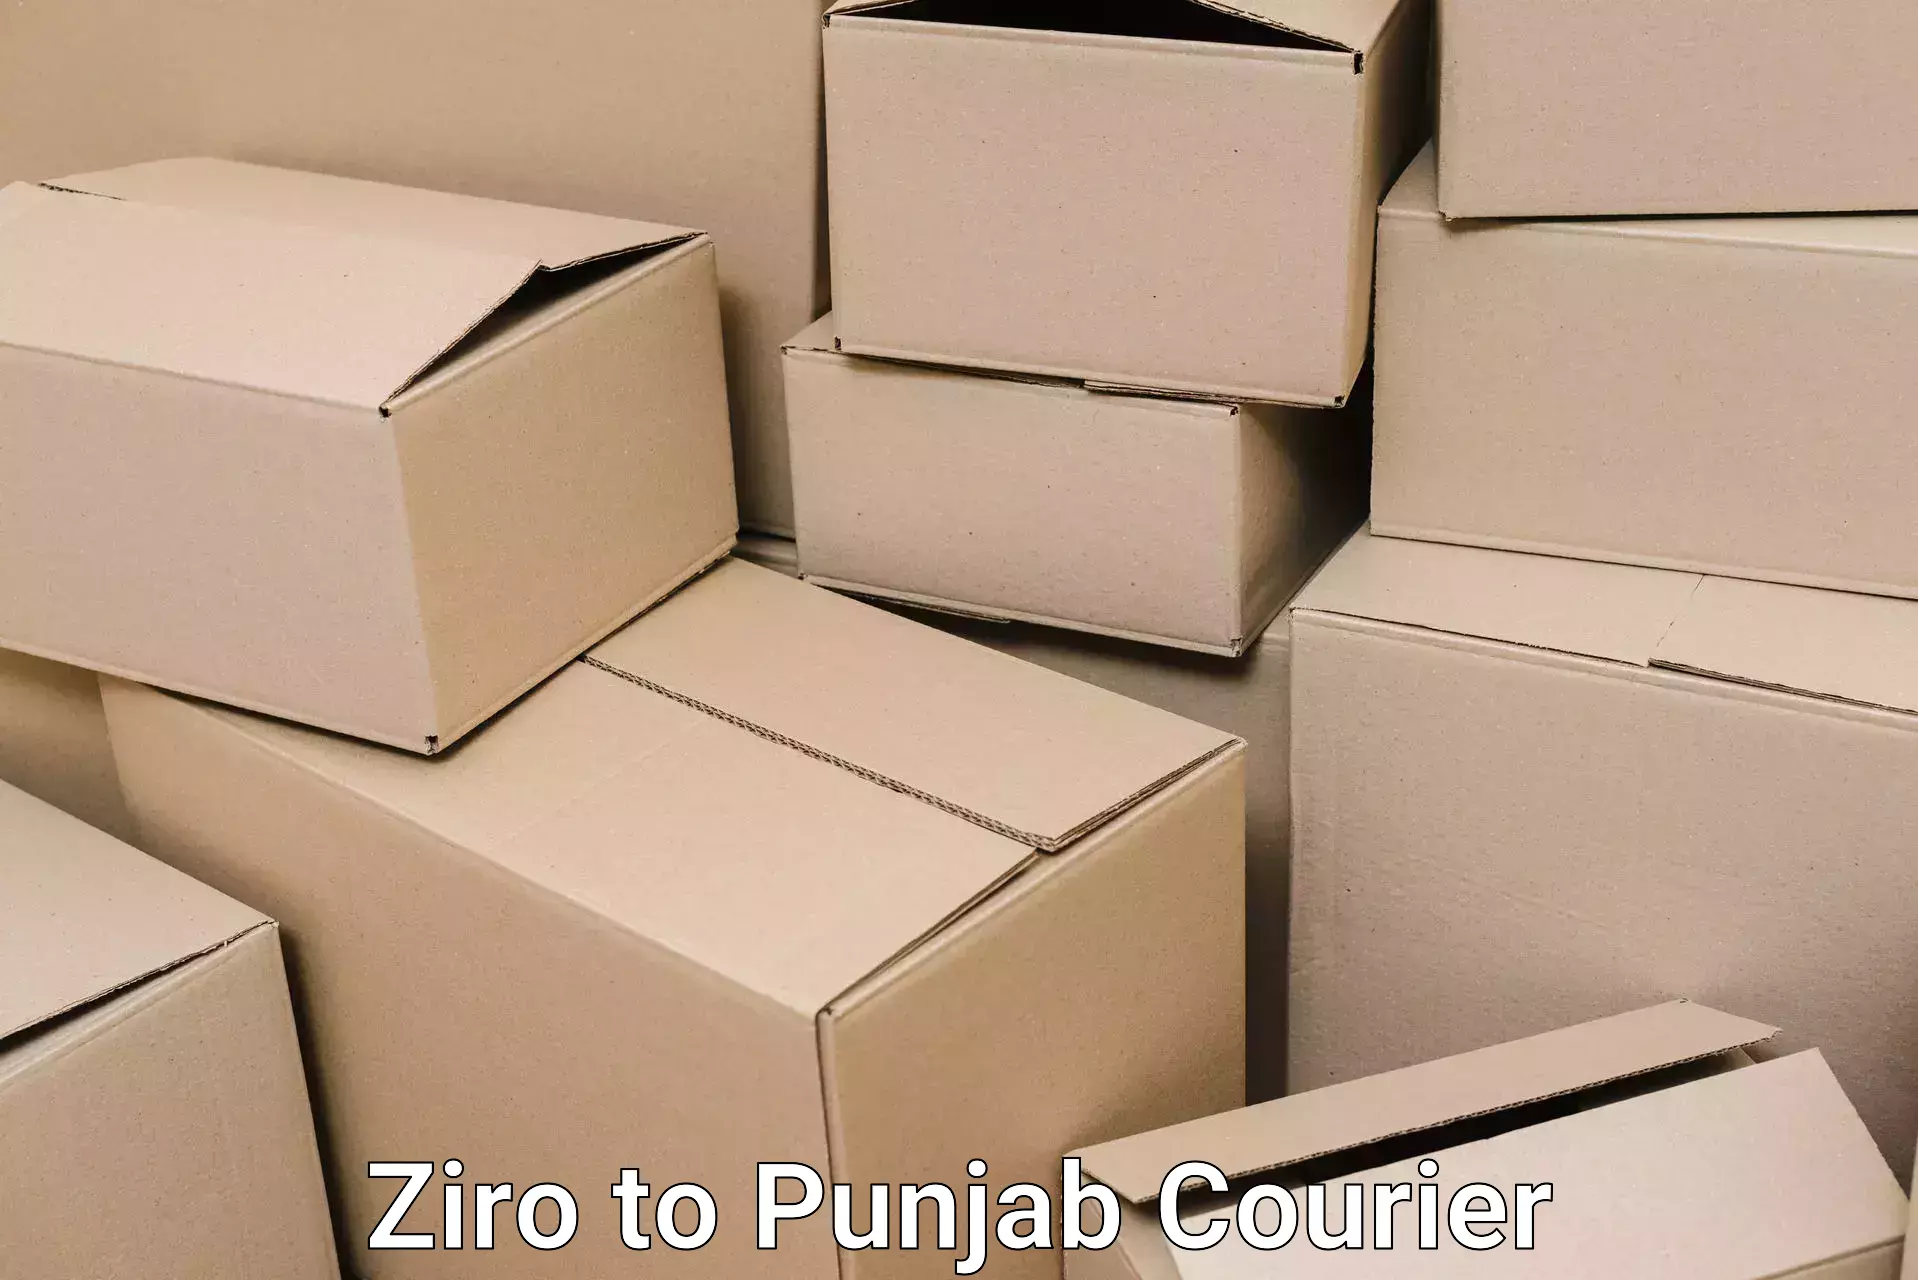 Quality relocation services Ziro to Punjab